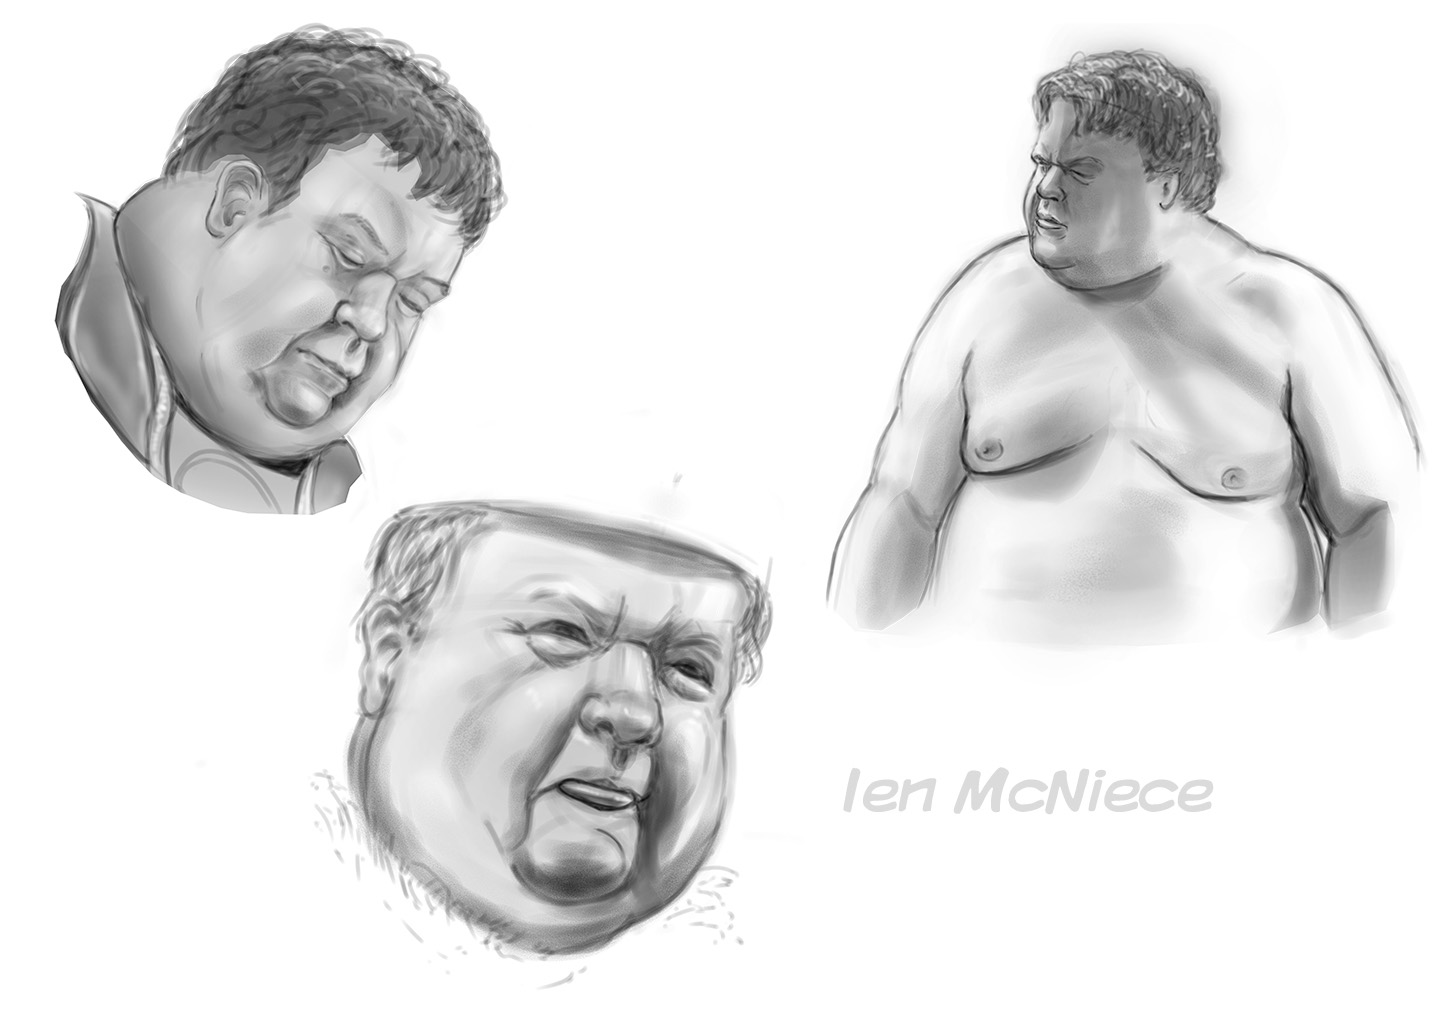 ien-mcneice sketch portrait face, naked torso